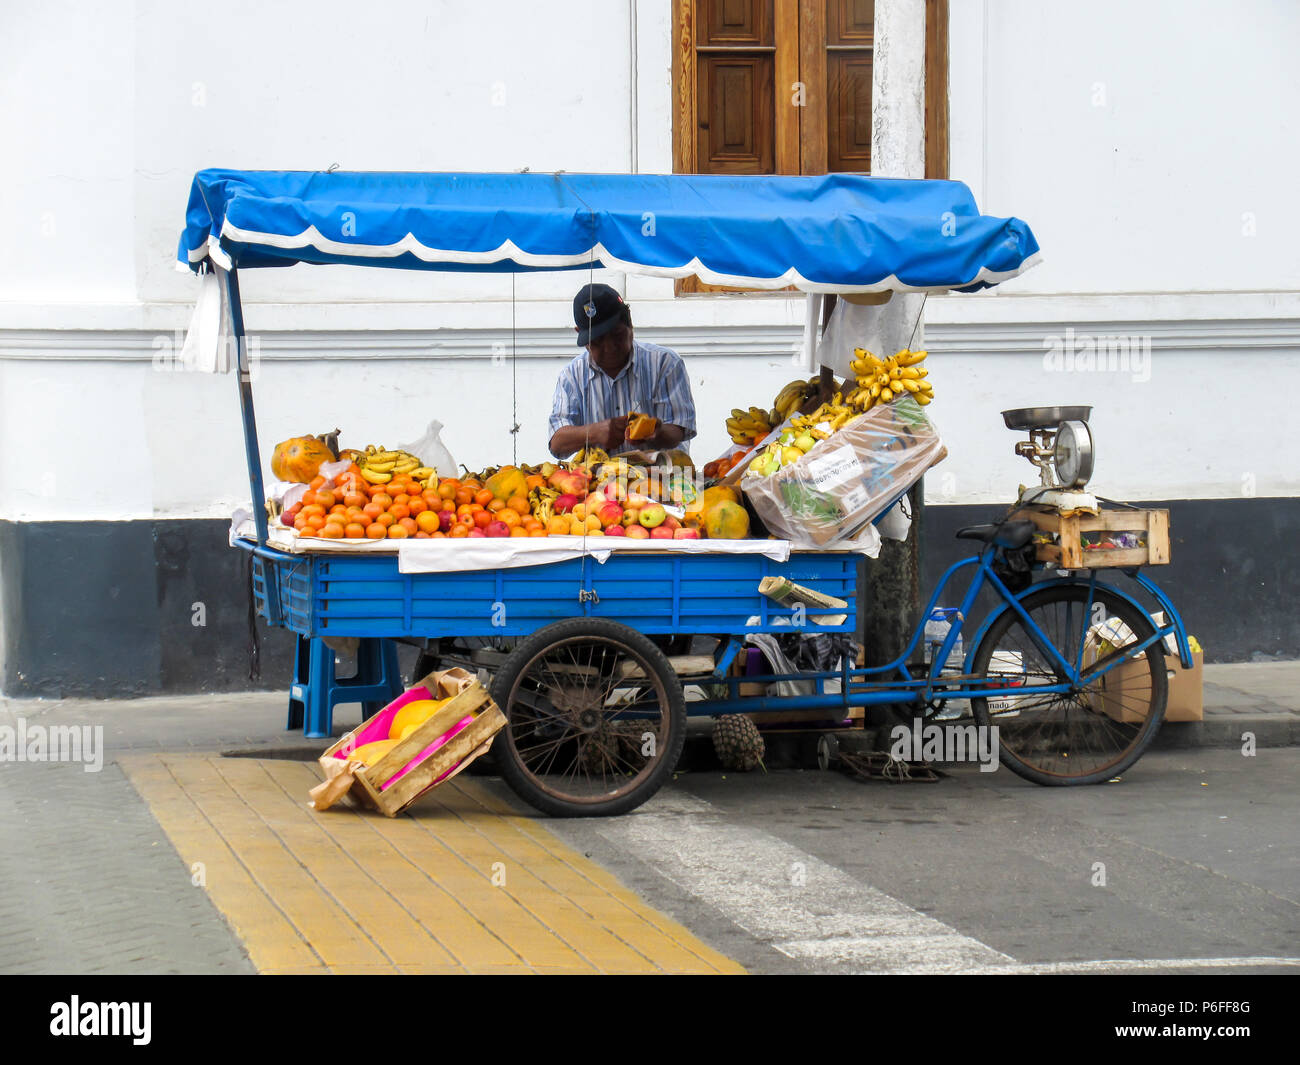 Fruits street vendor in El Callao, Lima, Peru Stock Photo